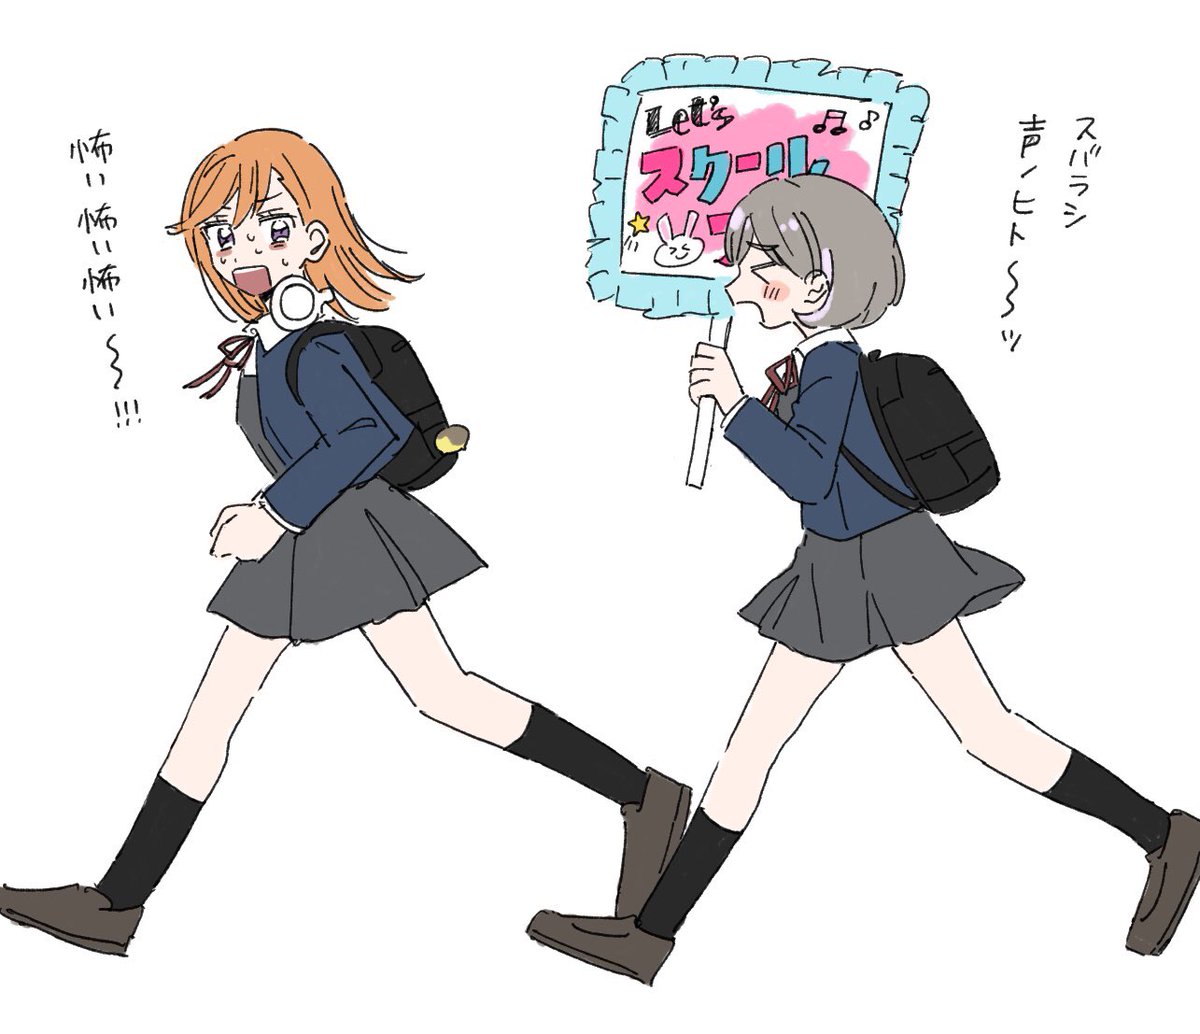 shibuya kanon multiple girls 2girls school uniform yuigaoka school uniform bag orange hair jacket  illustration images